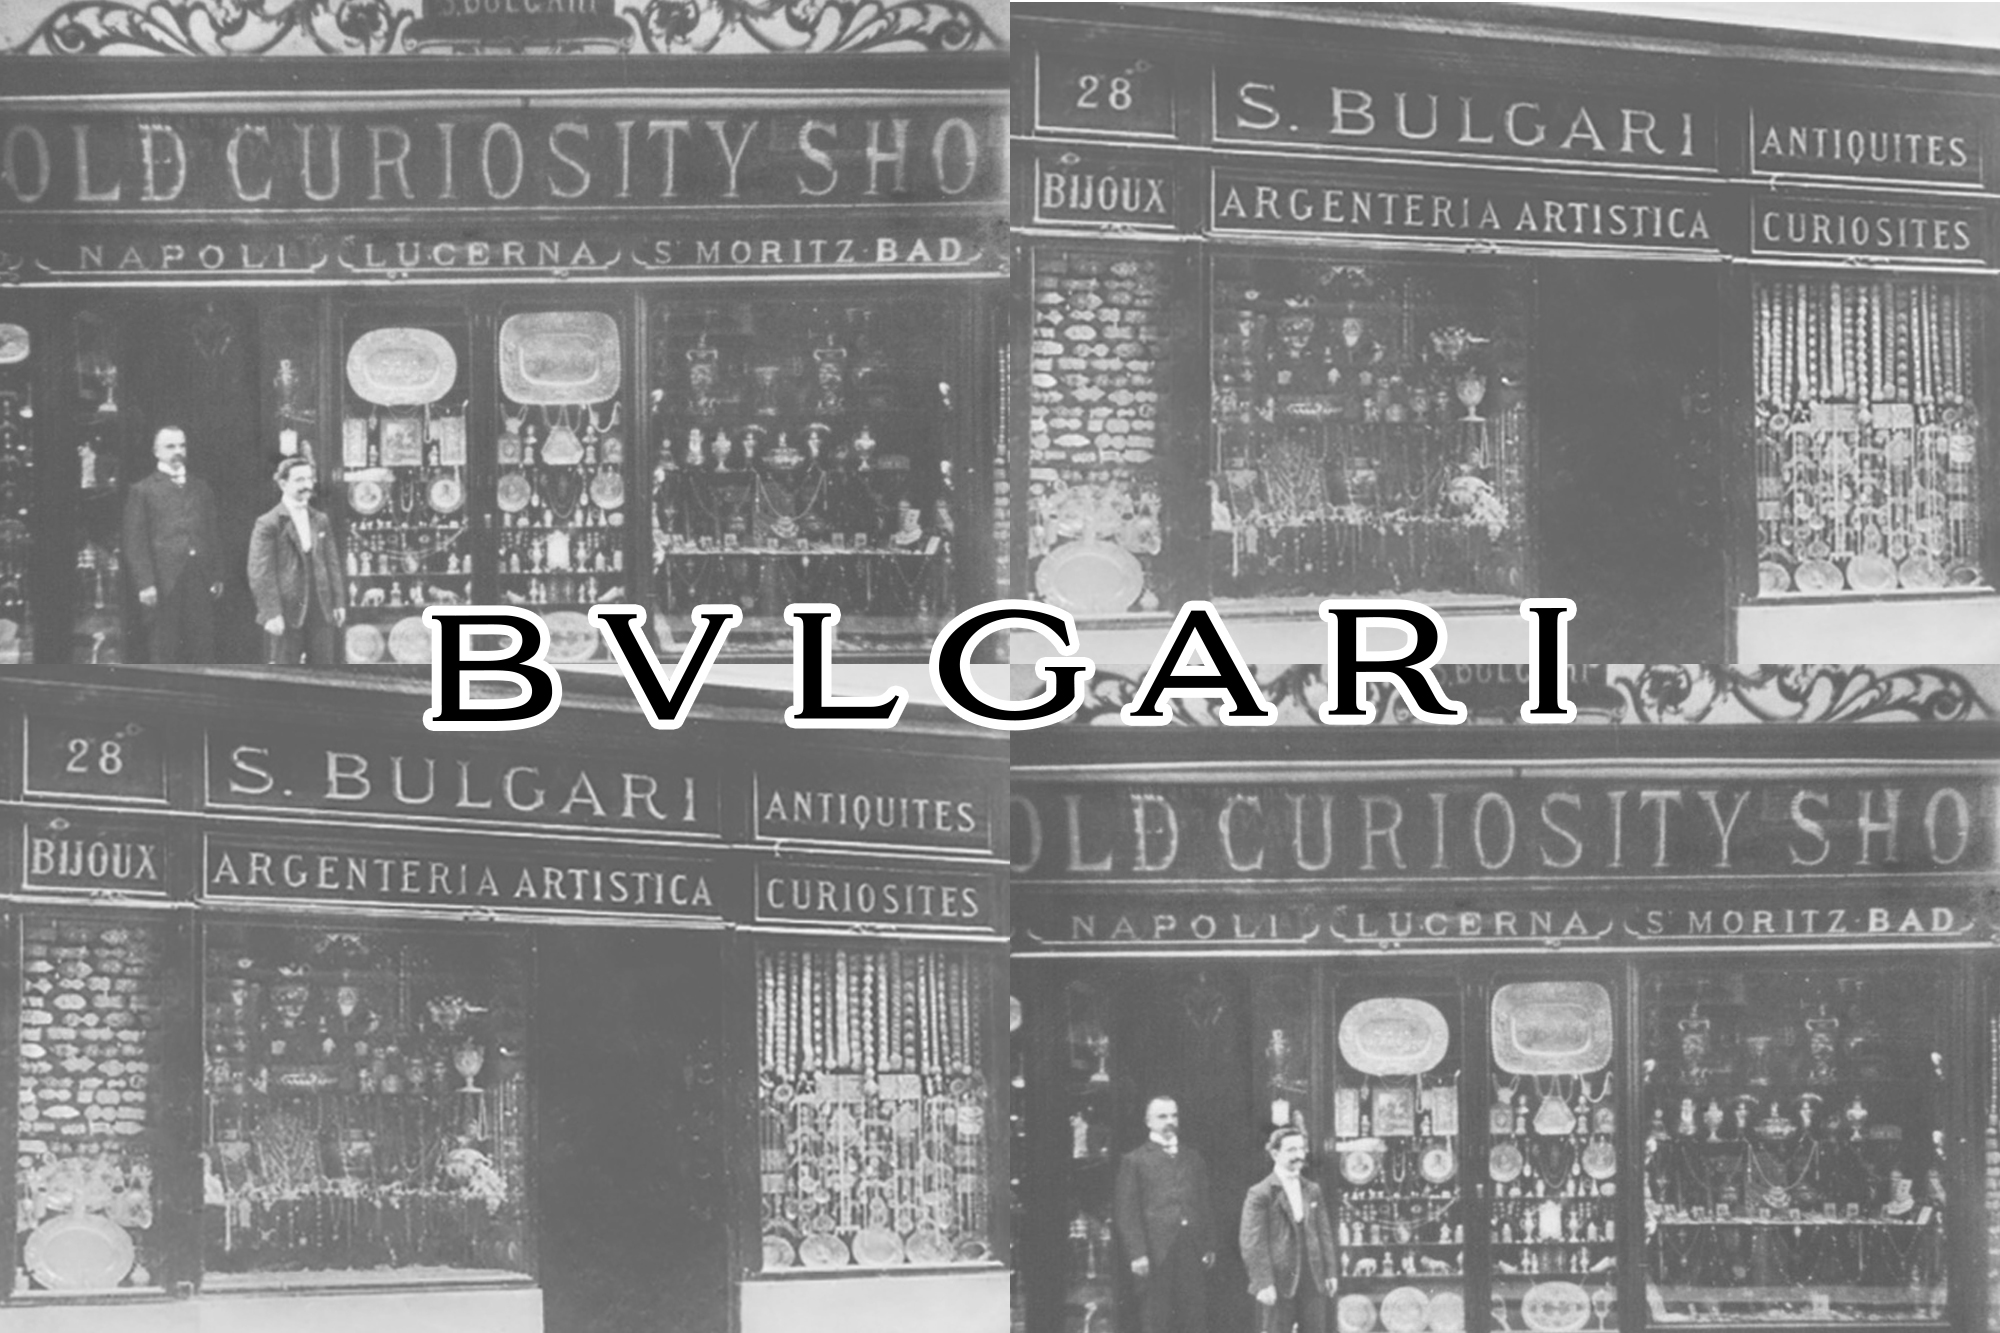 Bulgari, Jewelery, Watches, Perfumery, Leather Goods and Hospitality...